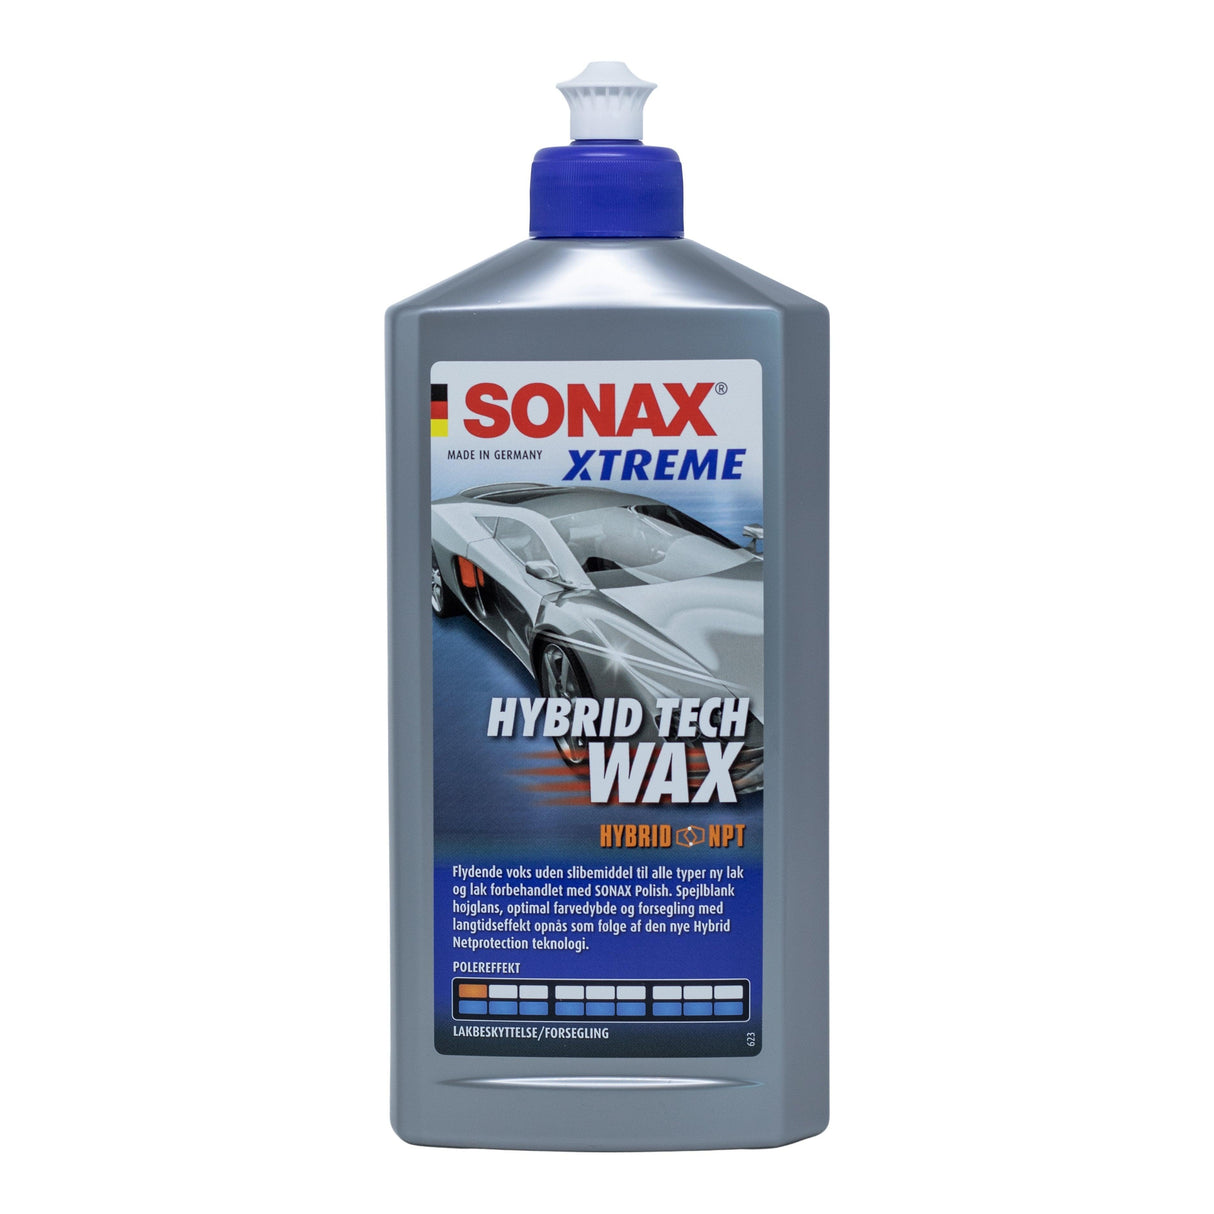 SONAX Xtreme Hybrid Tech WAX NPT - Xpert Cleaning